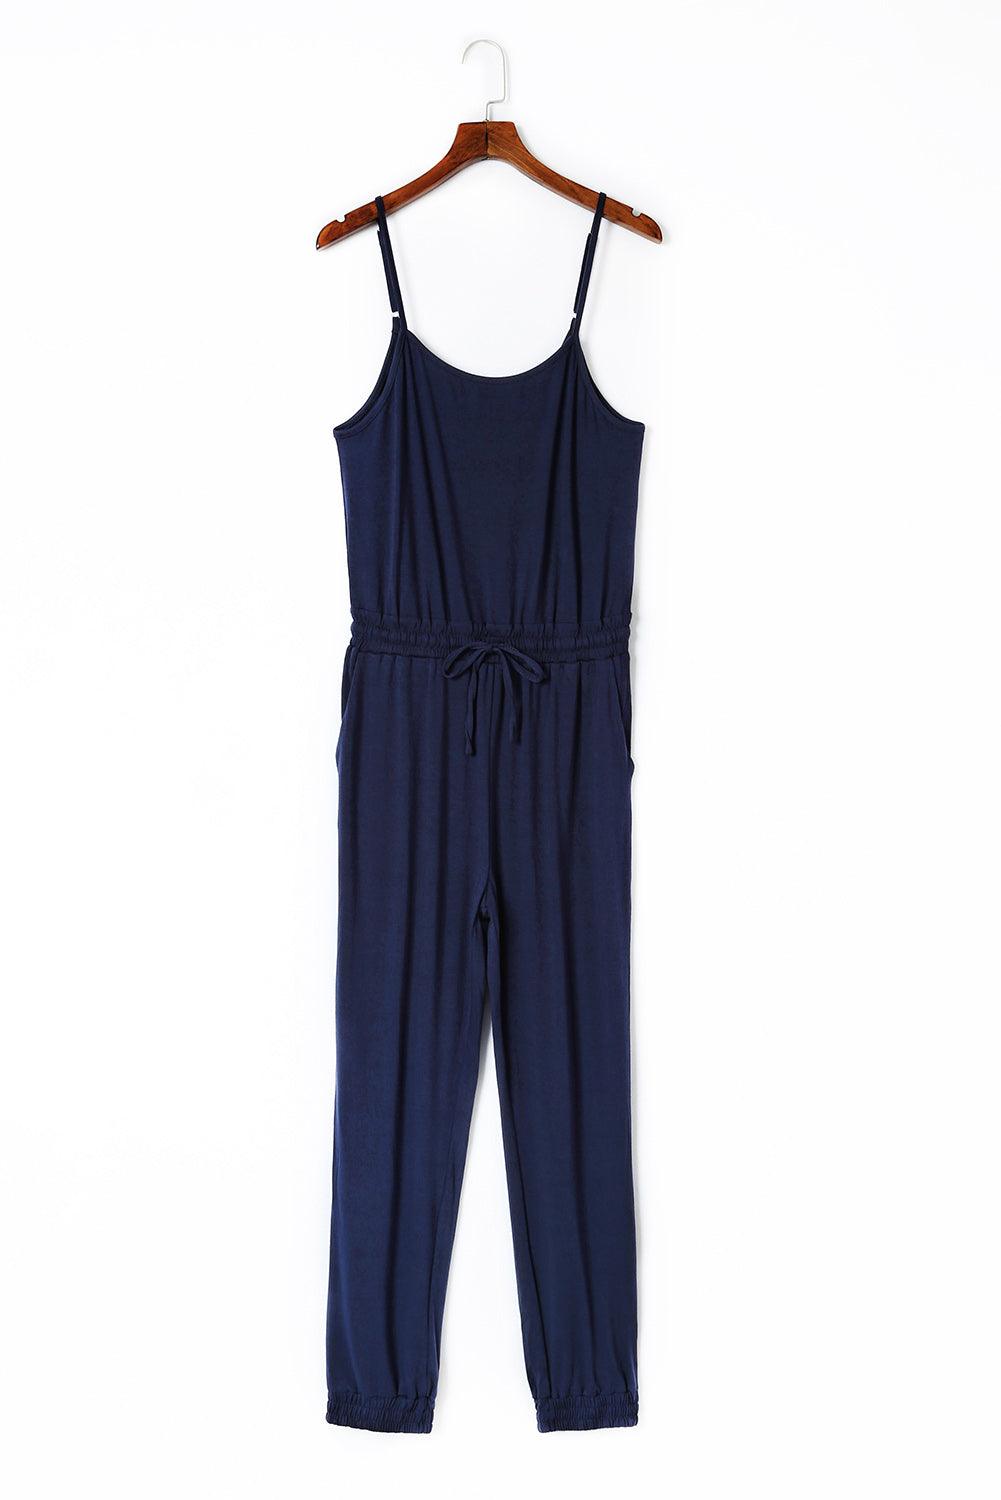 Dark Blue Pockets Drawstring Waist Spaghetti Strap Jumpsuit - Vesteeto